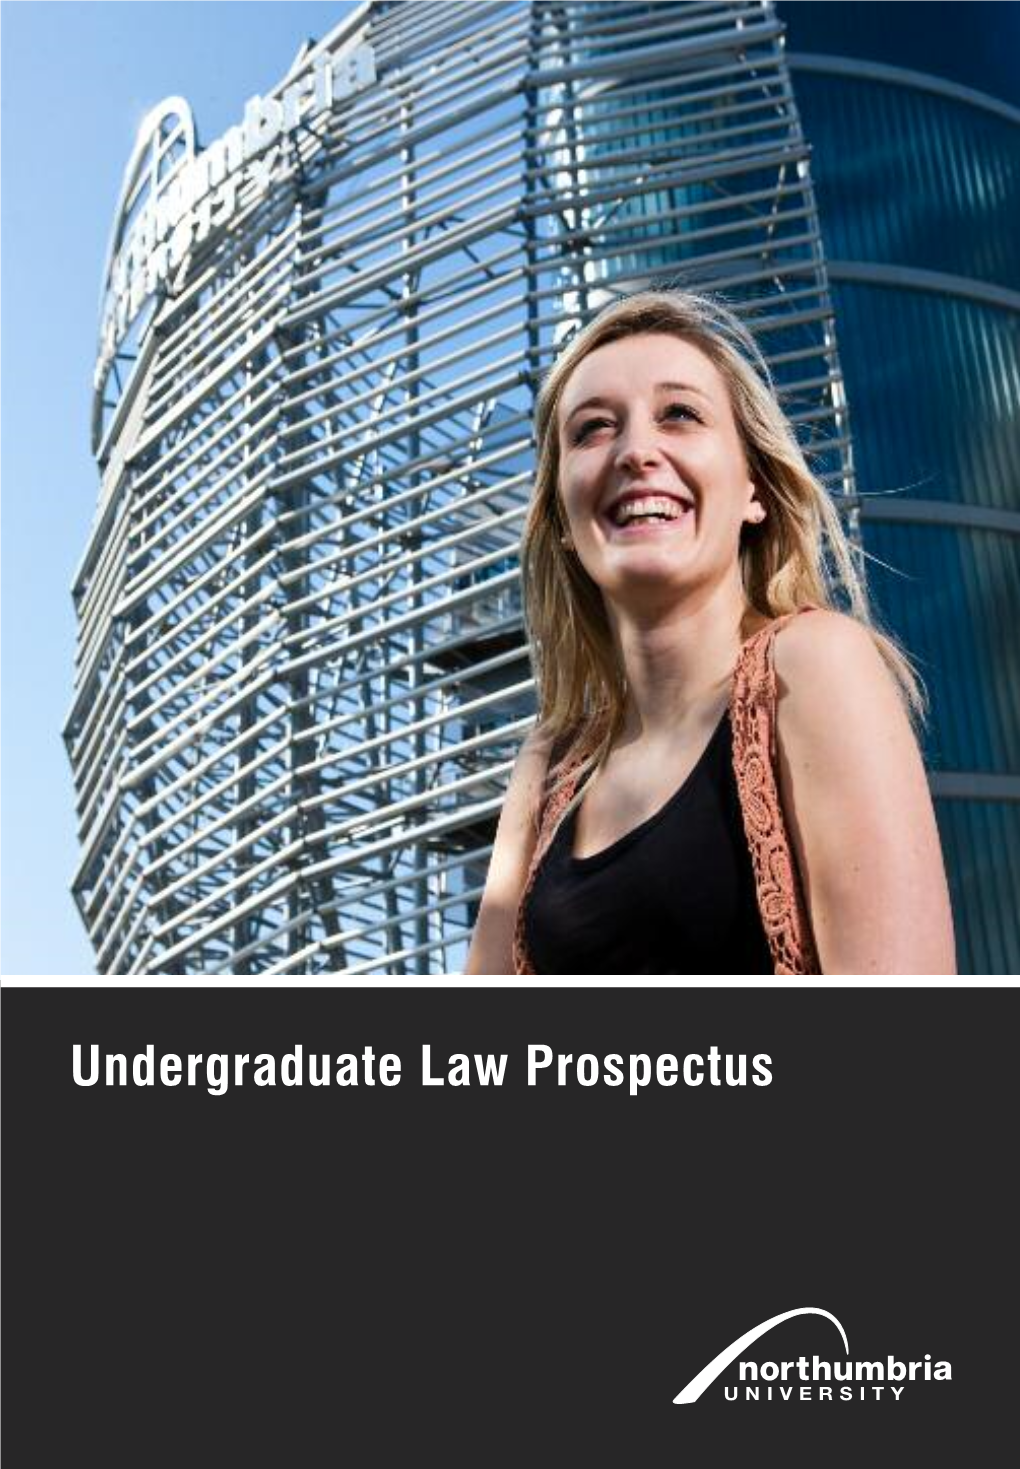 Undergraduate Law Prospectus Welcome to Northumbria Law School